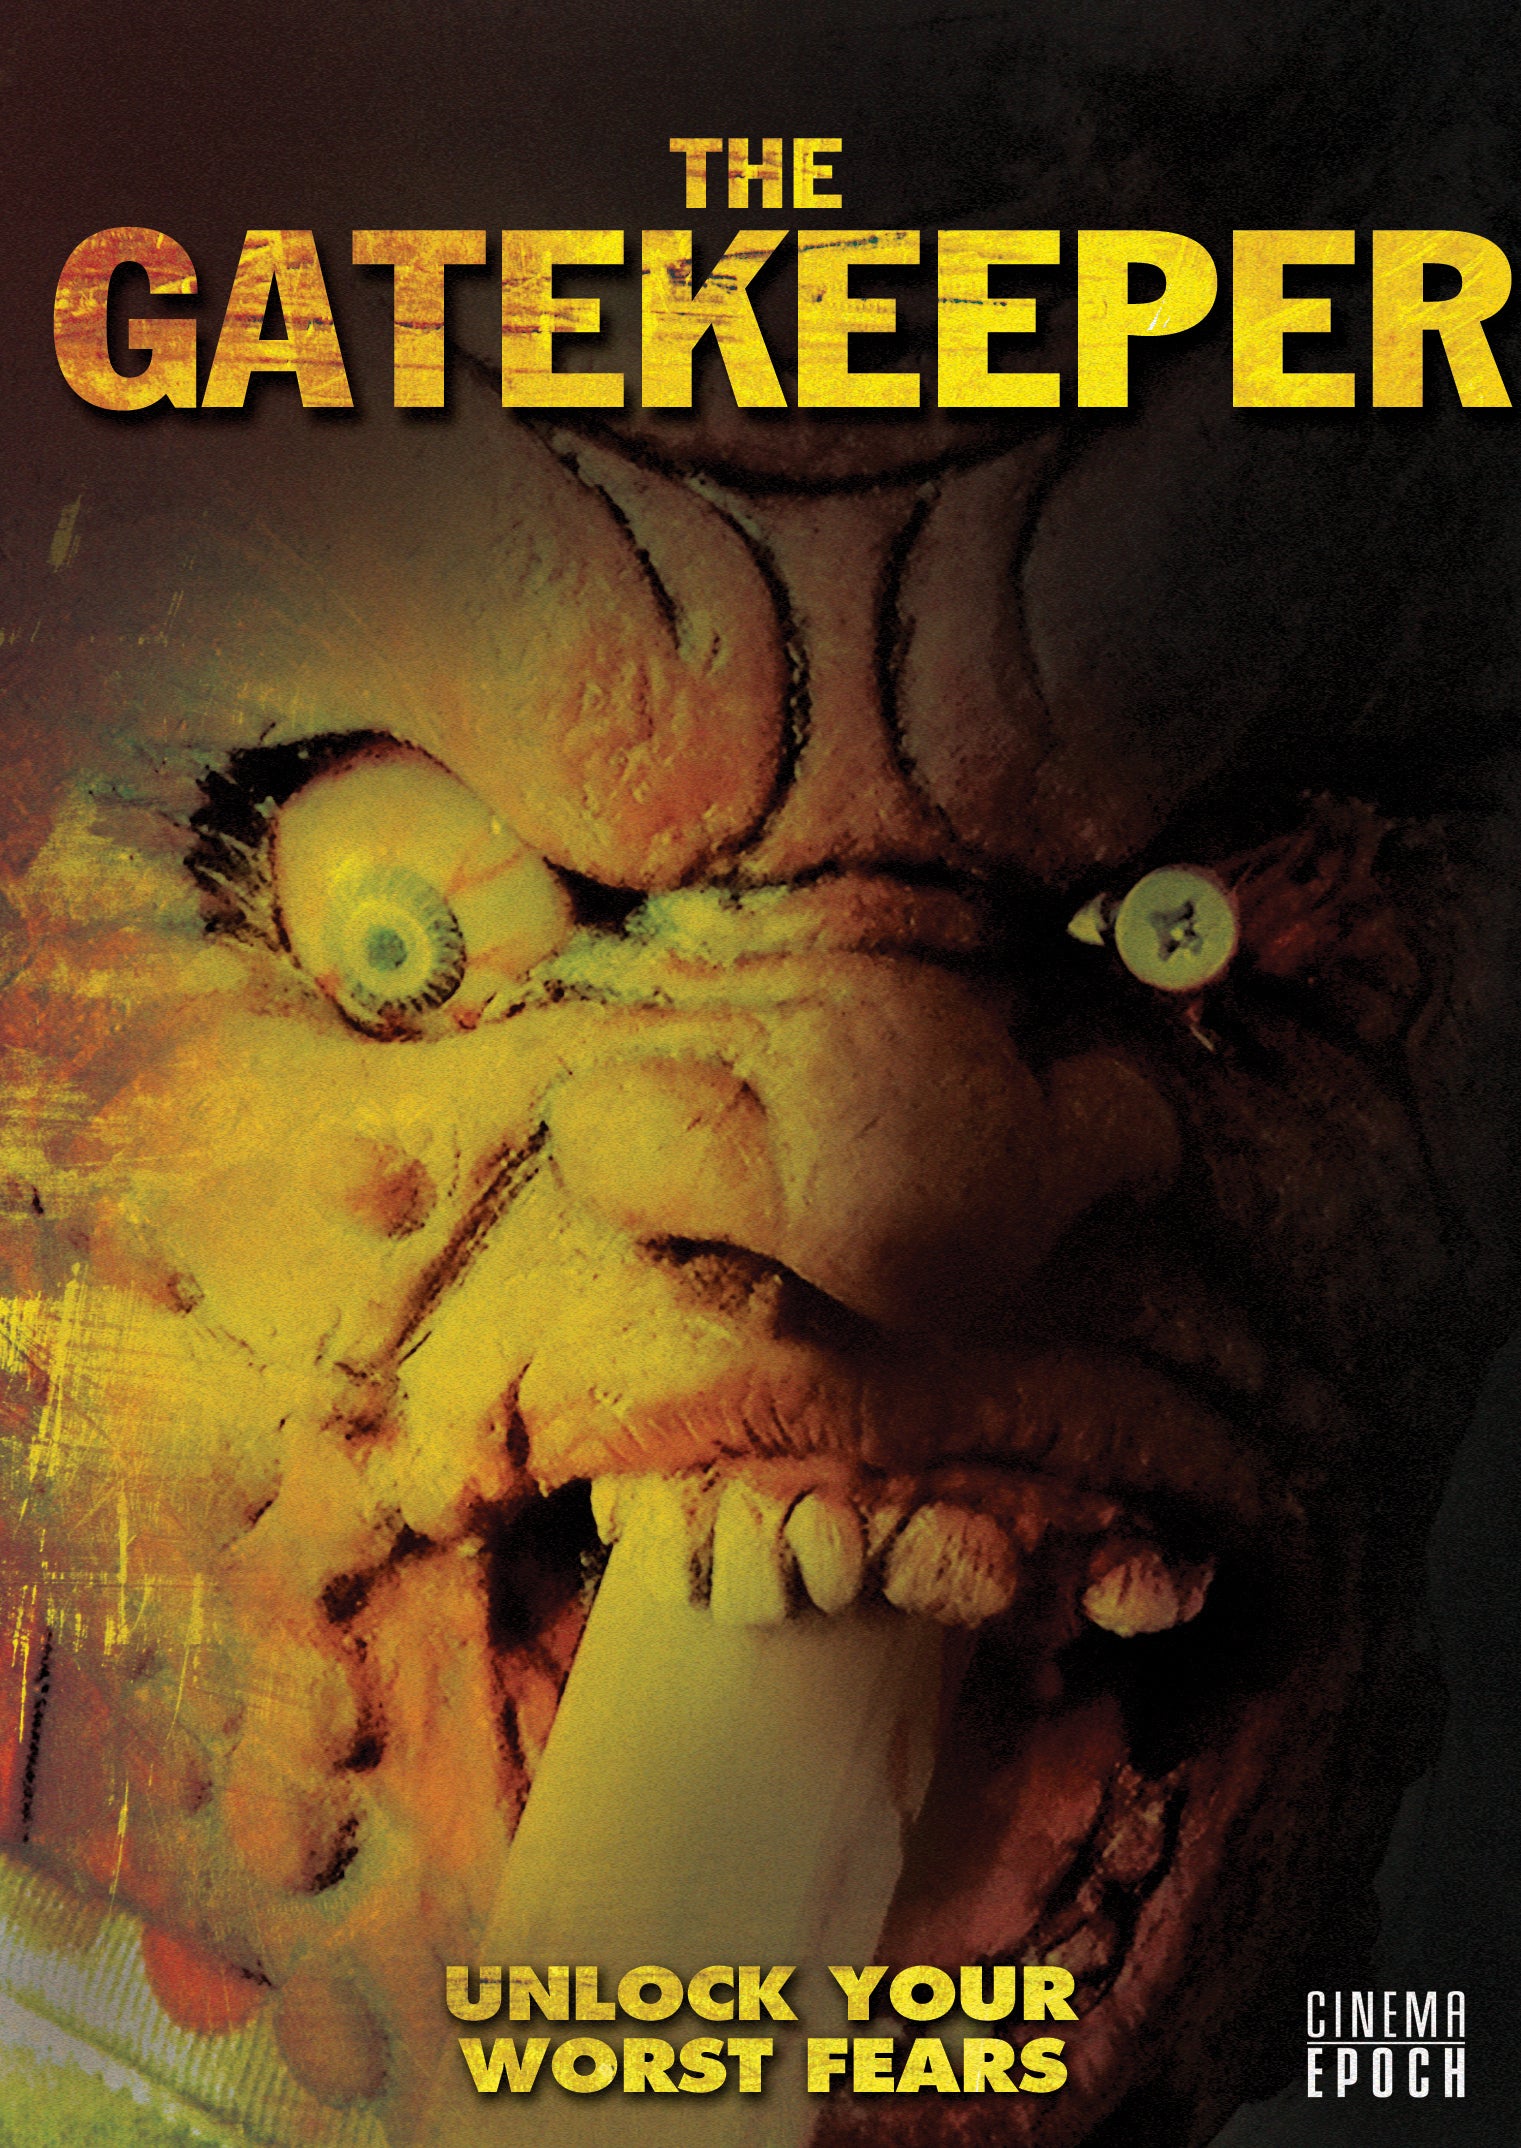 THE GATEKEEPER DVD